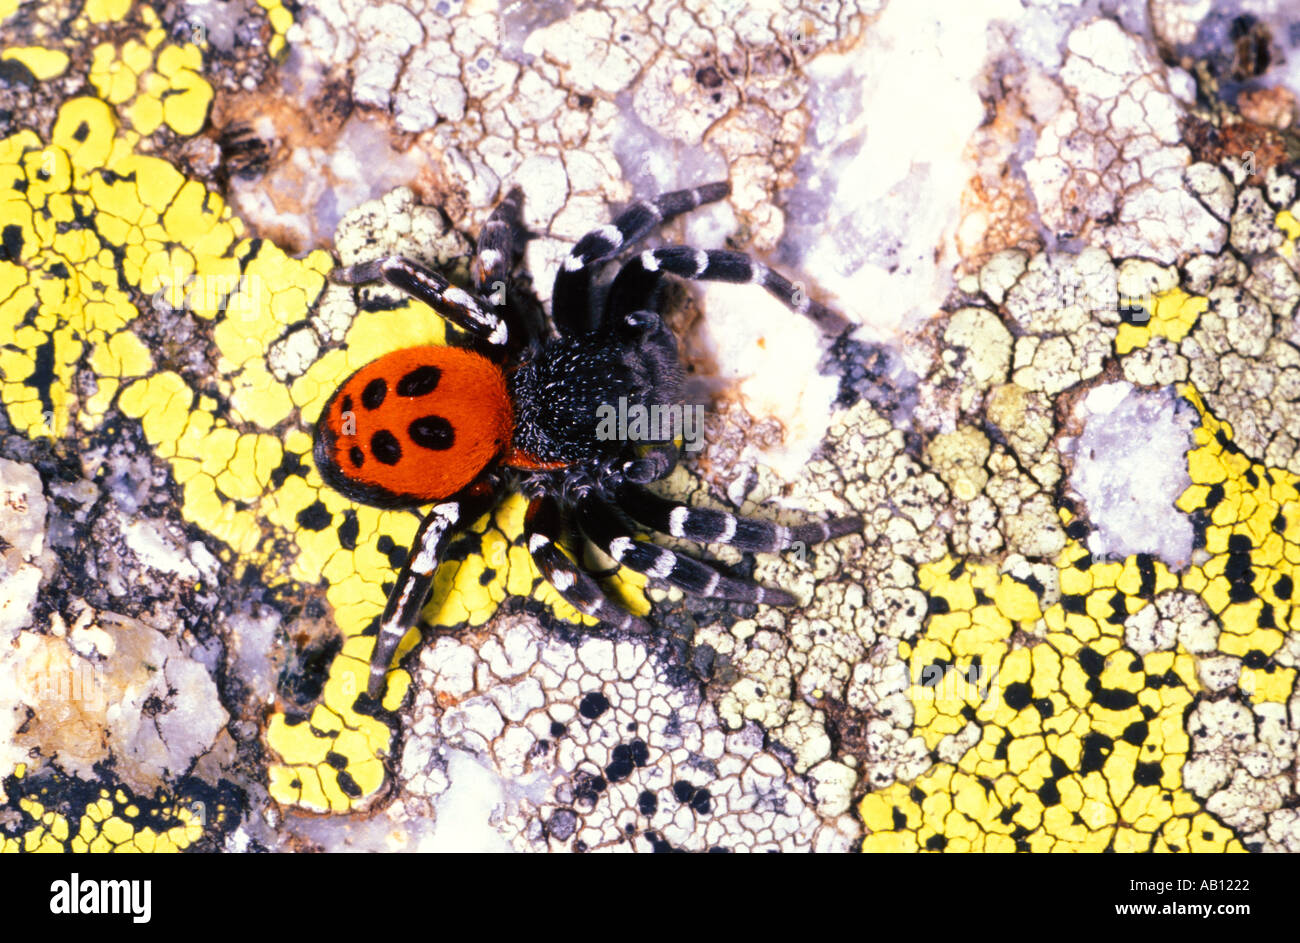 Ladybird Spider, Eresus niger. Male on rock with lichens Stock Photo